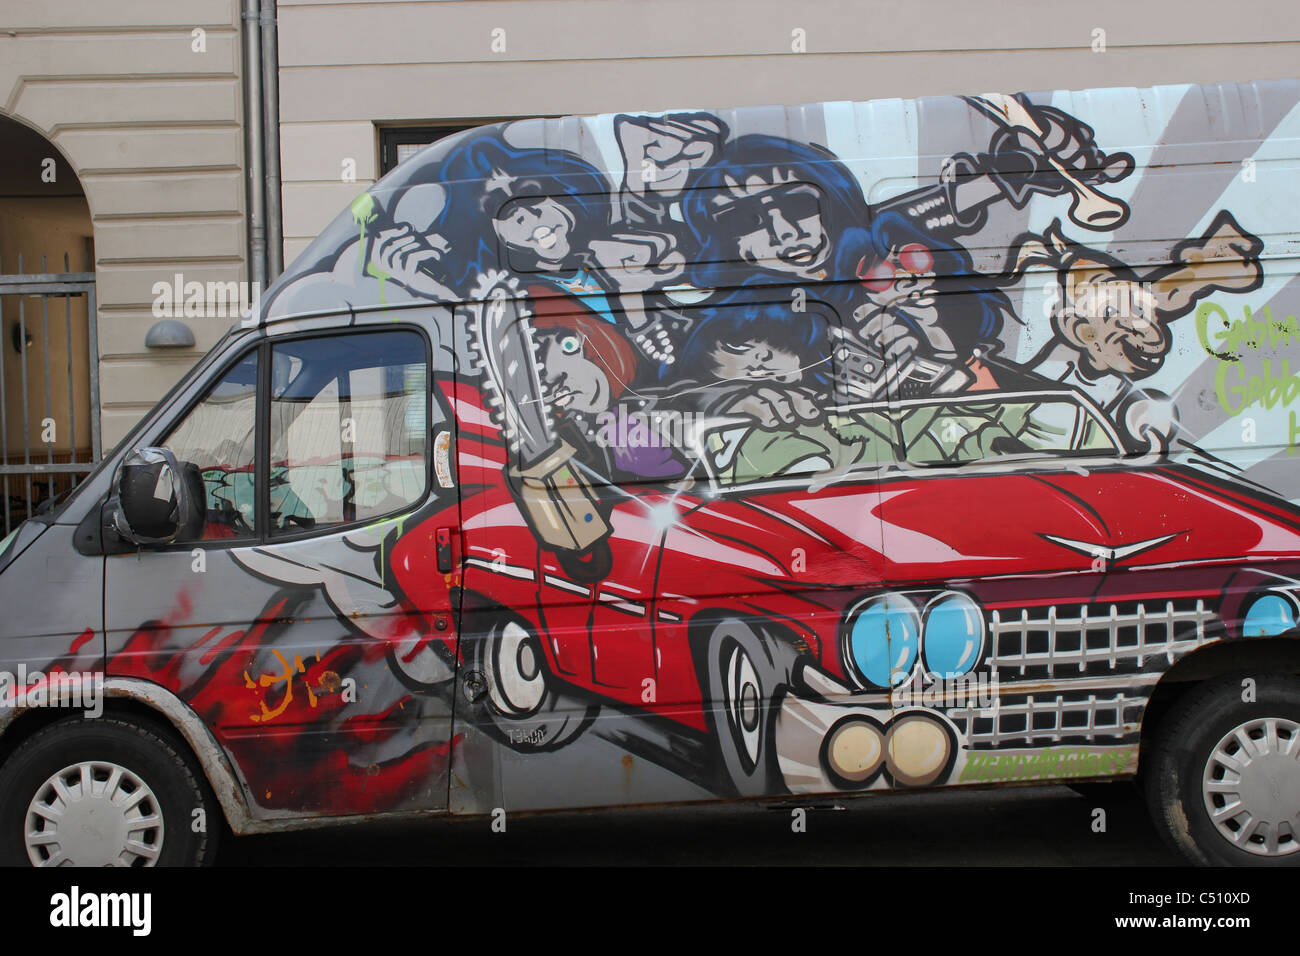 Funny van with Ramones figures painted on it Stock Photo